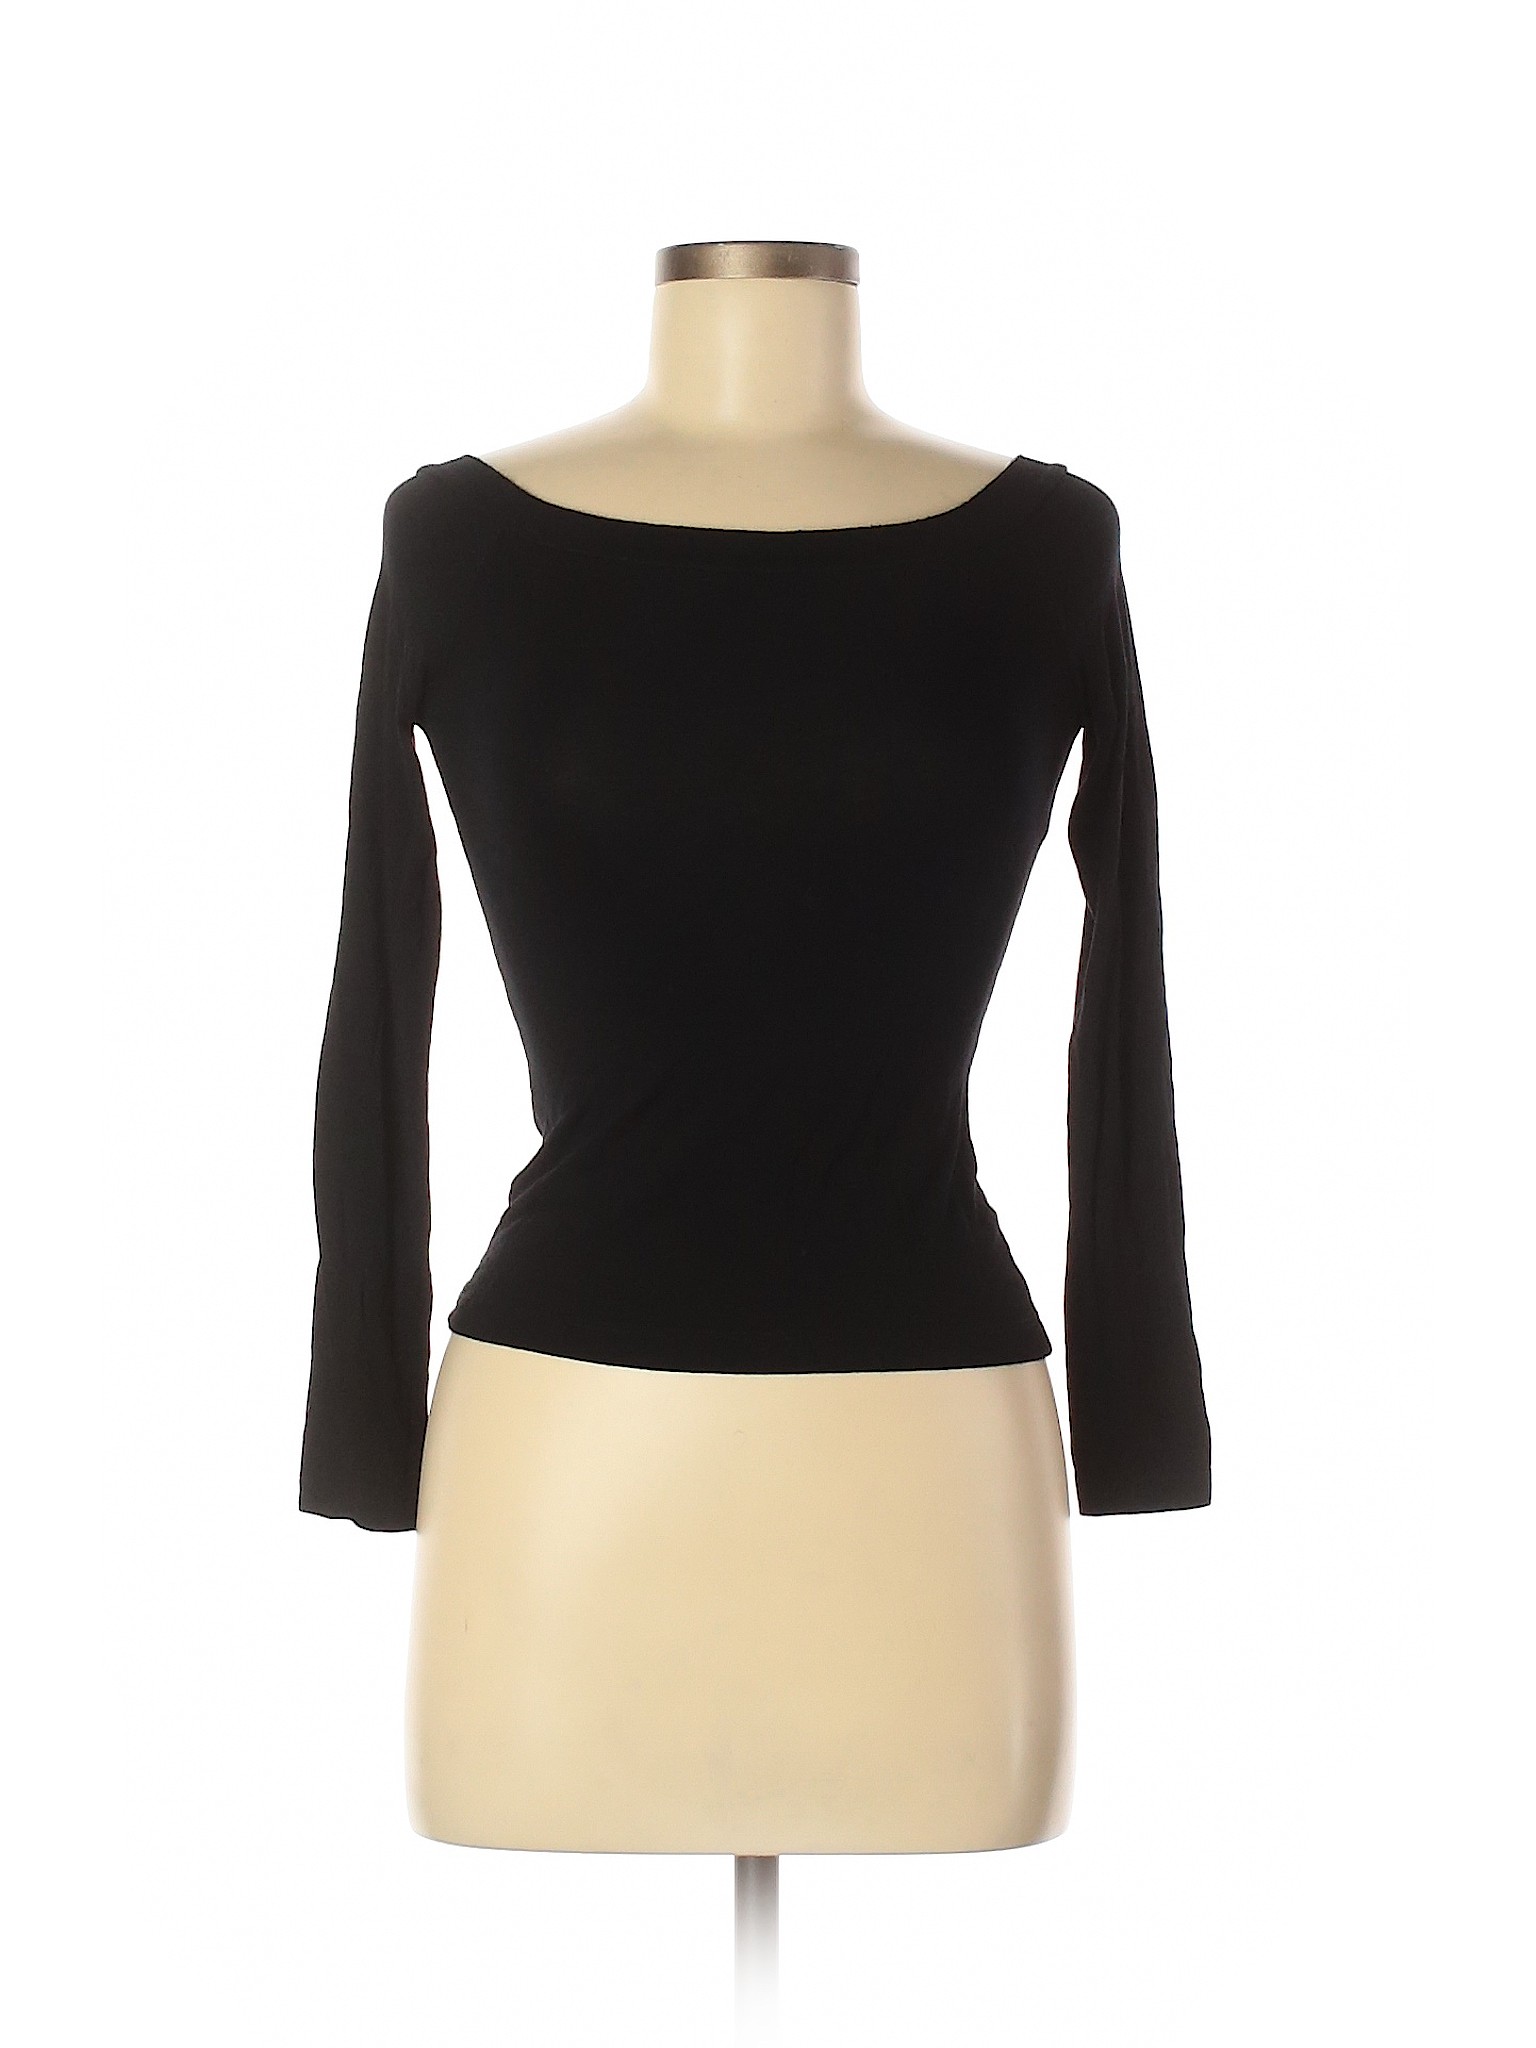 ASOS Women Black Long Sleeve Top 6 | eBay